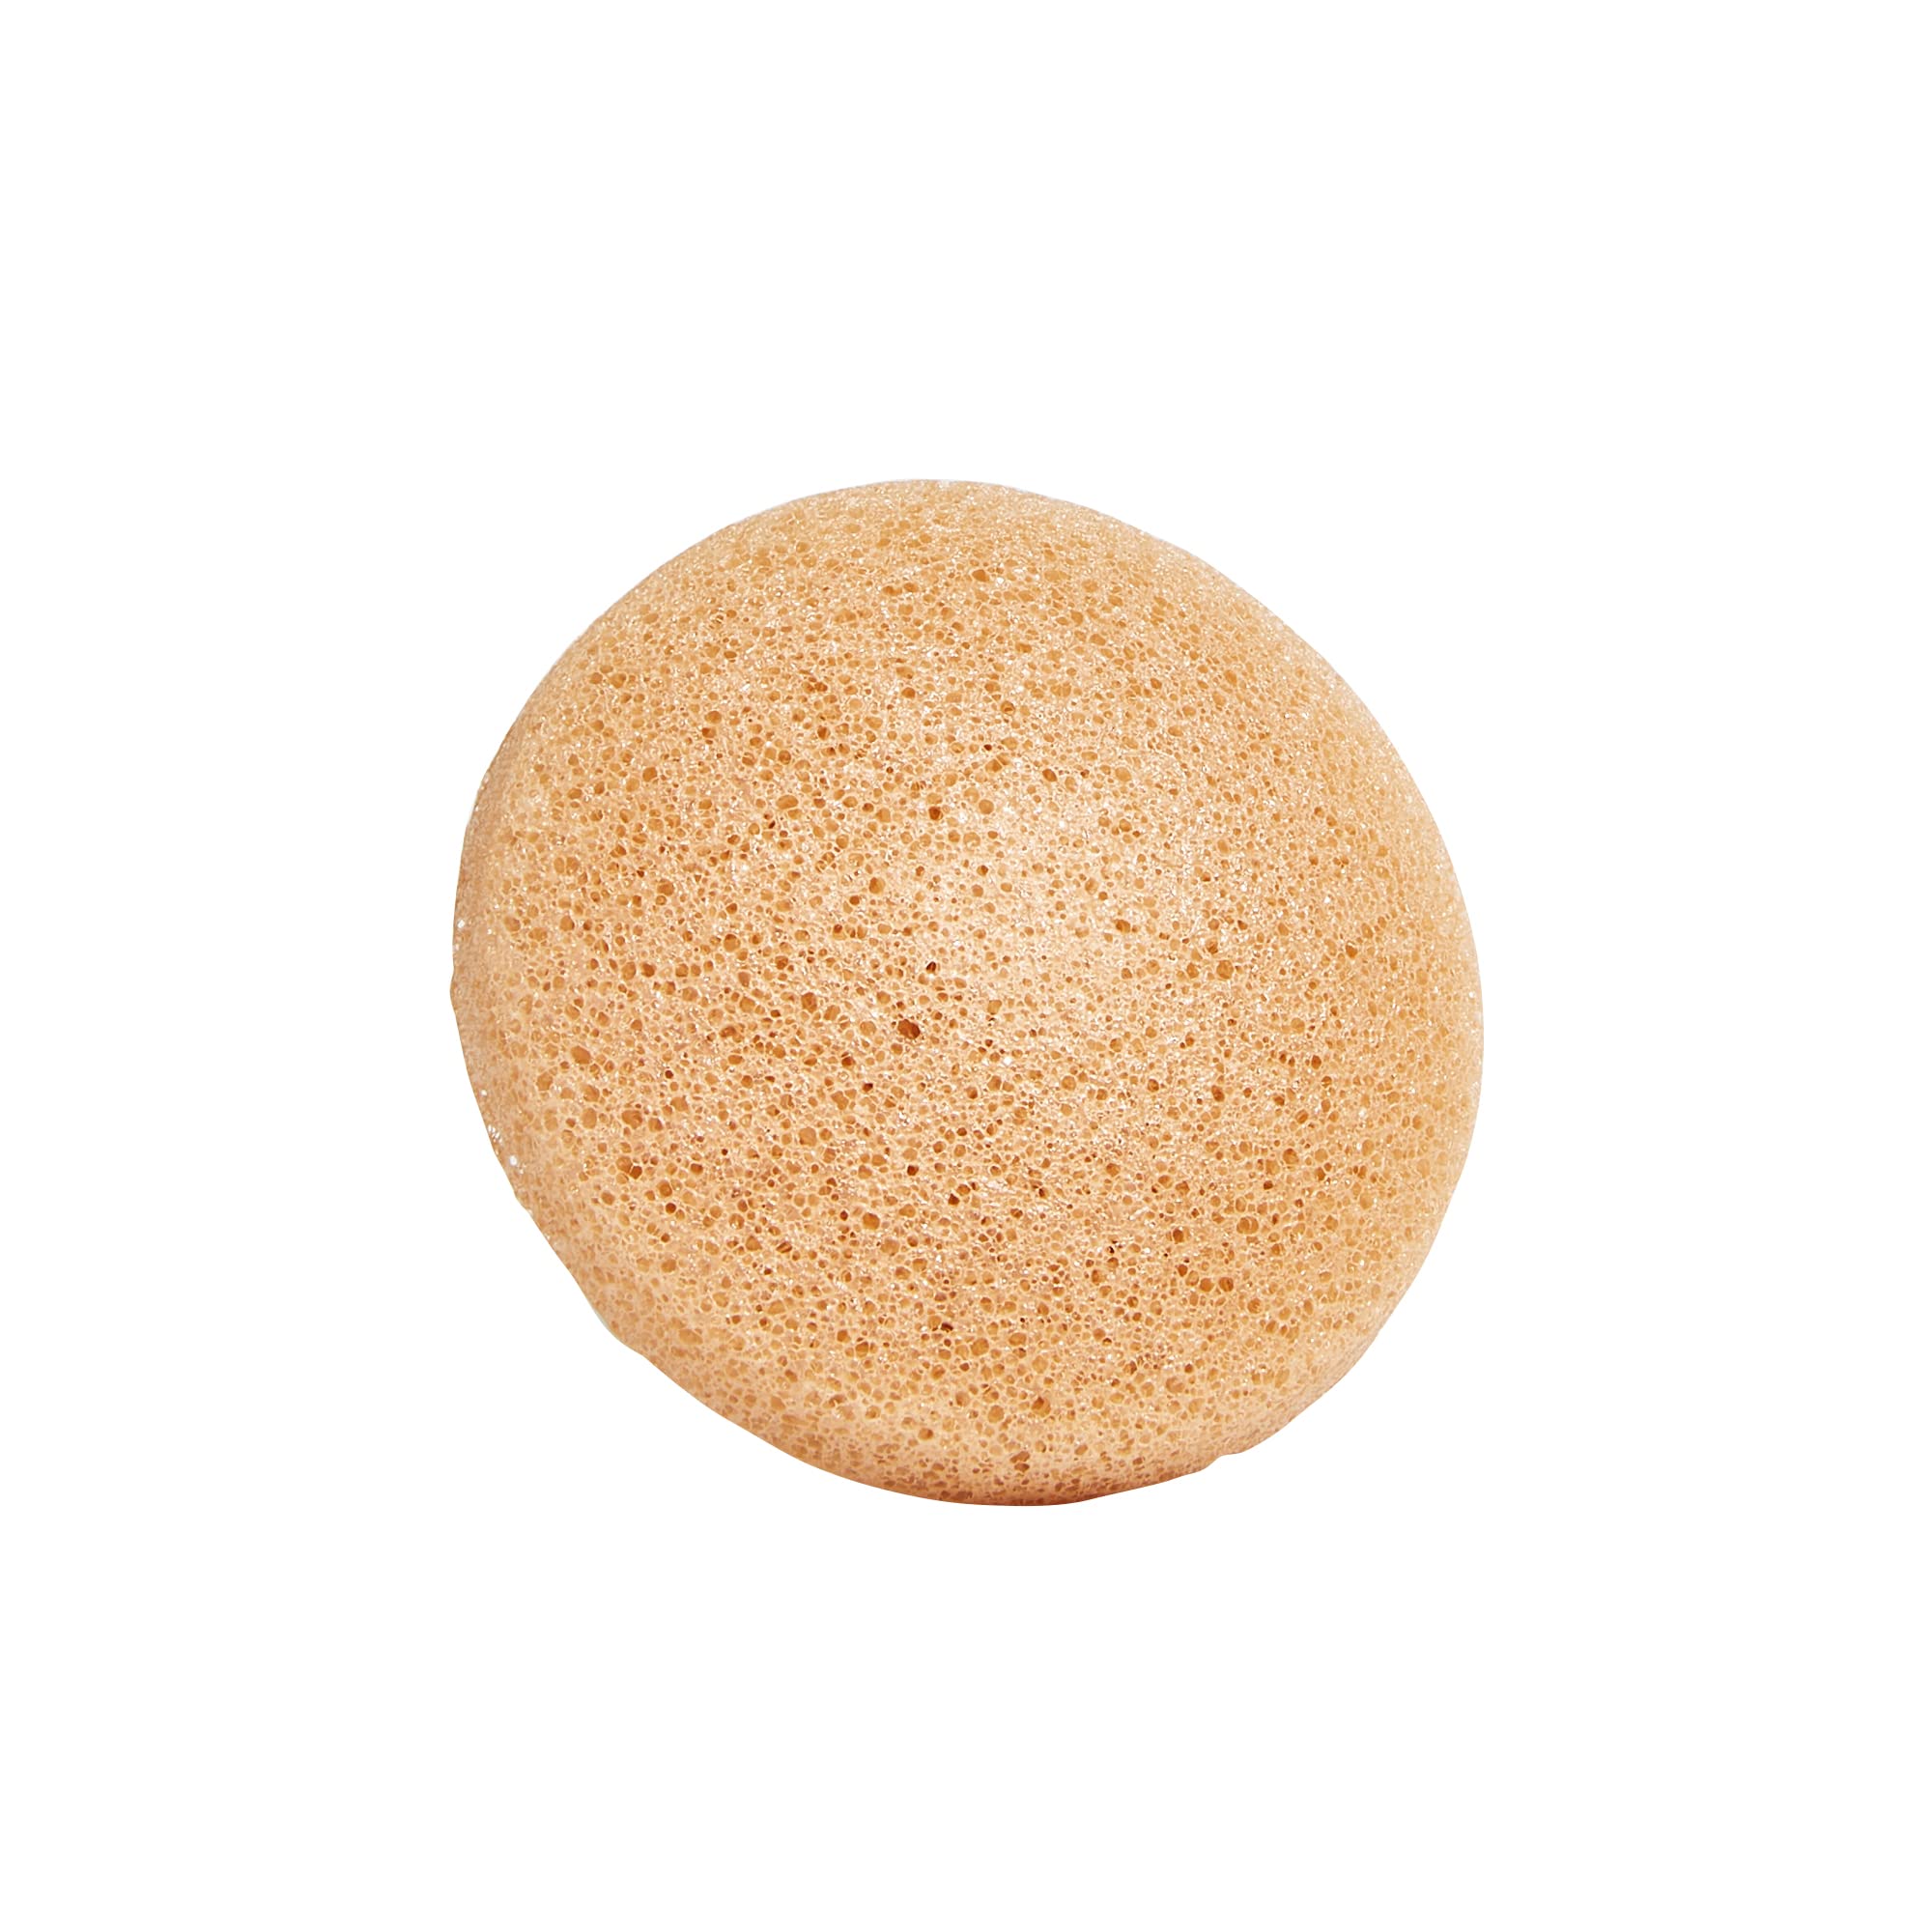 Honest Beauty Gentle Konjac Sponge with Pink Kaolin Clay |Soft Exfoliating Facial Sponge |Buff & Soften Skin | 1 count